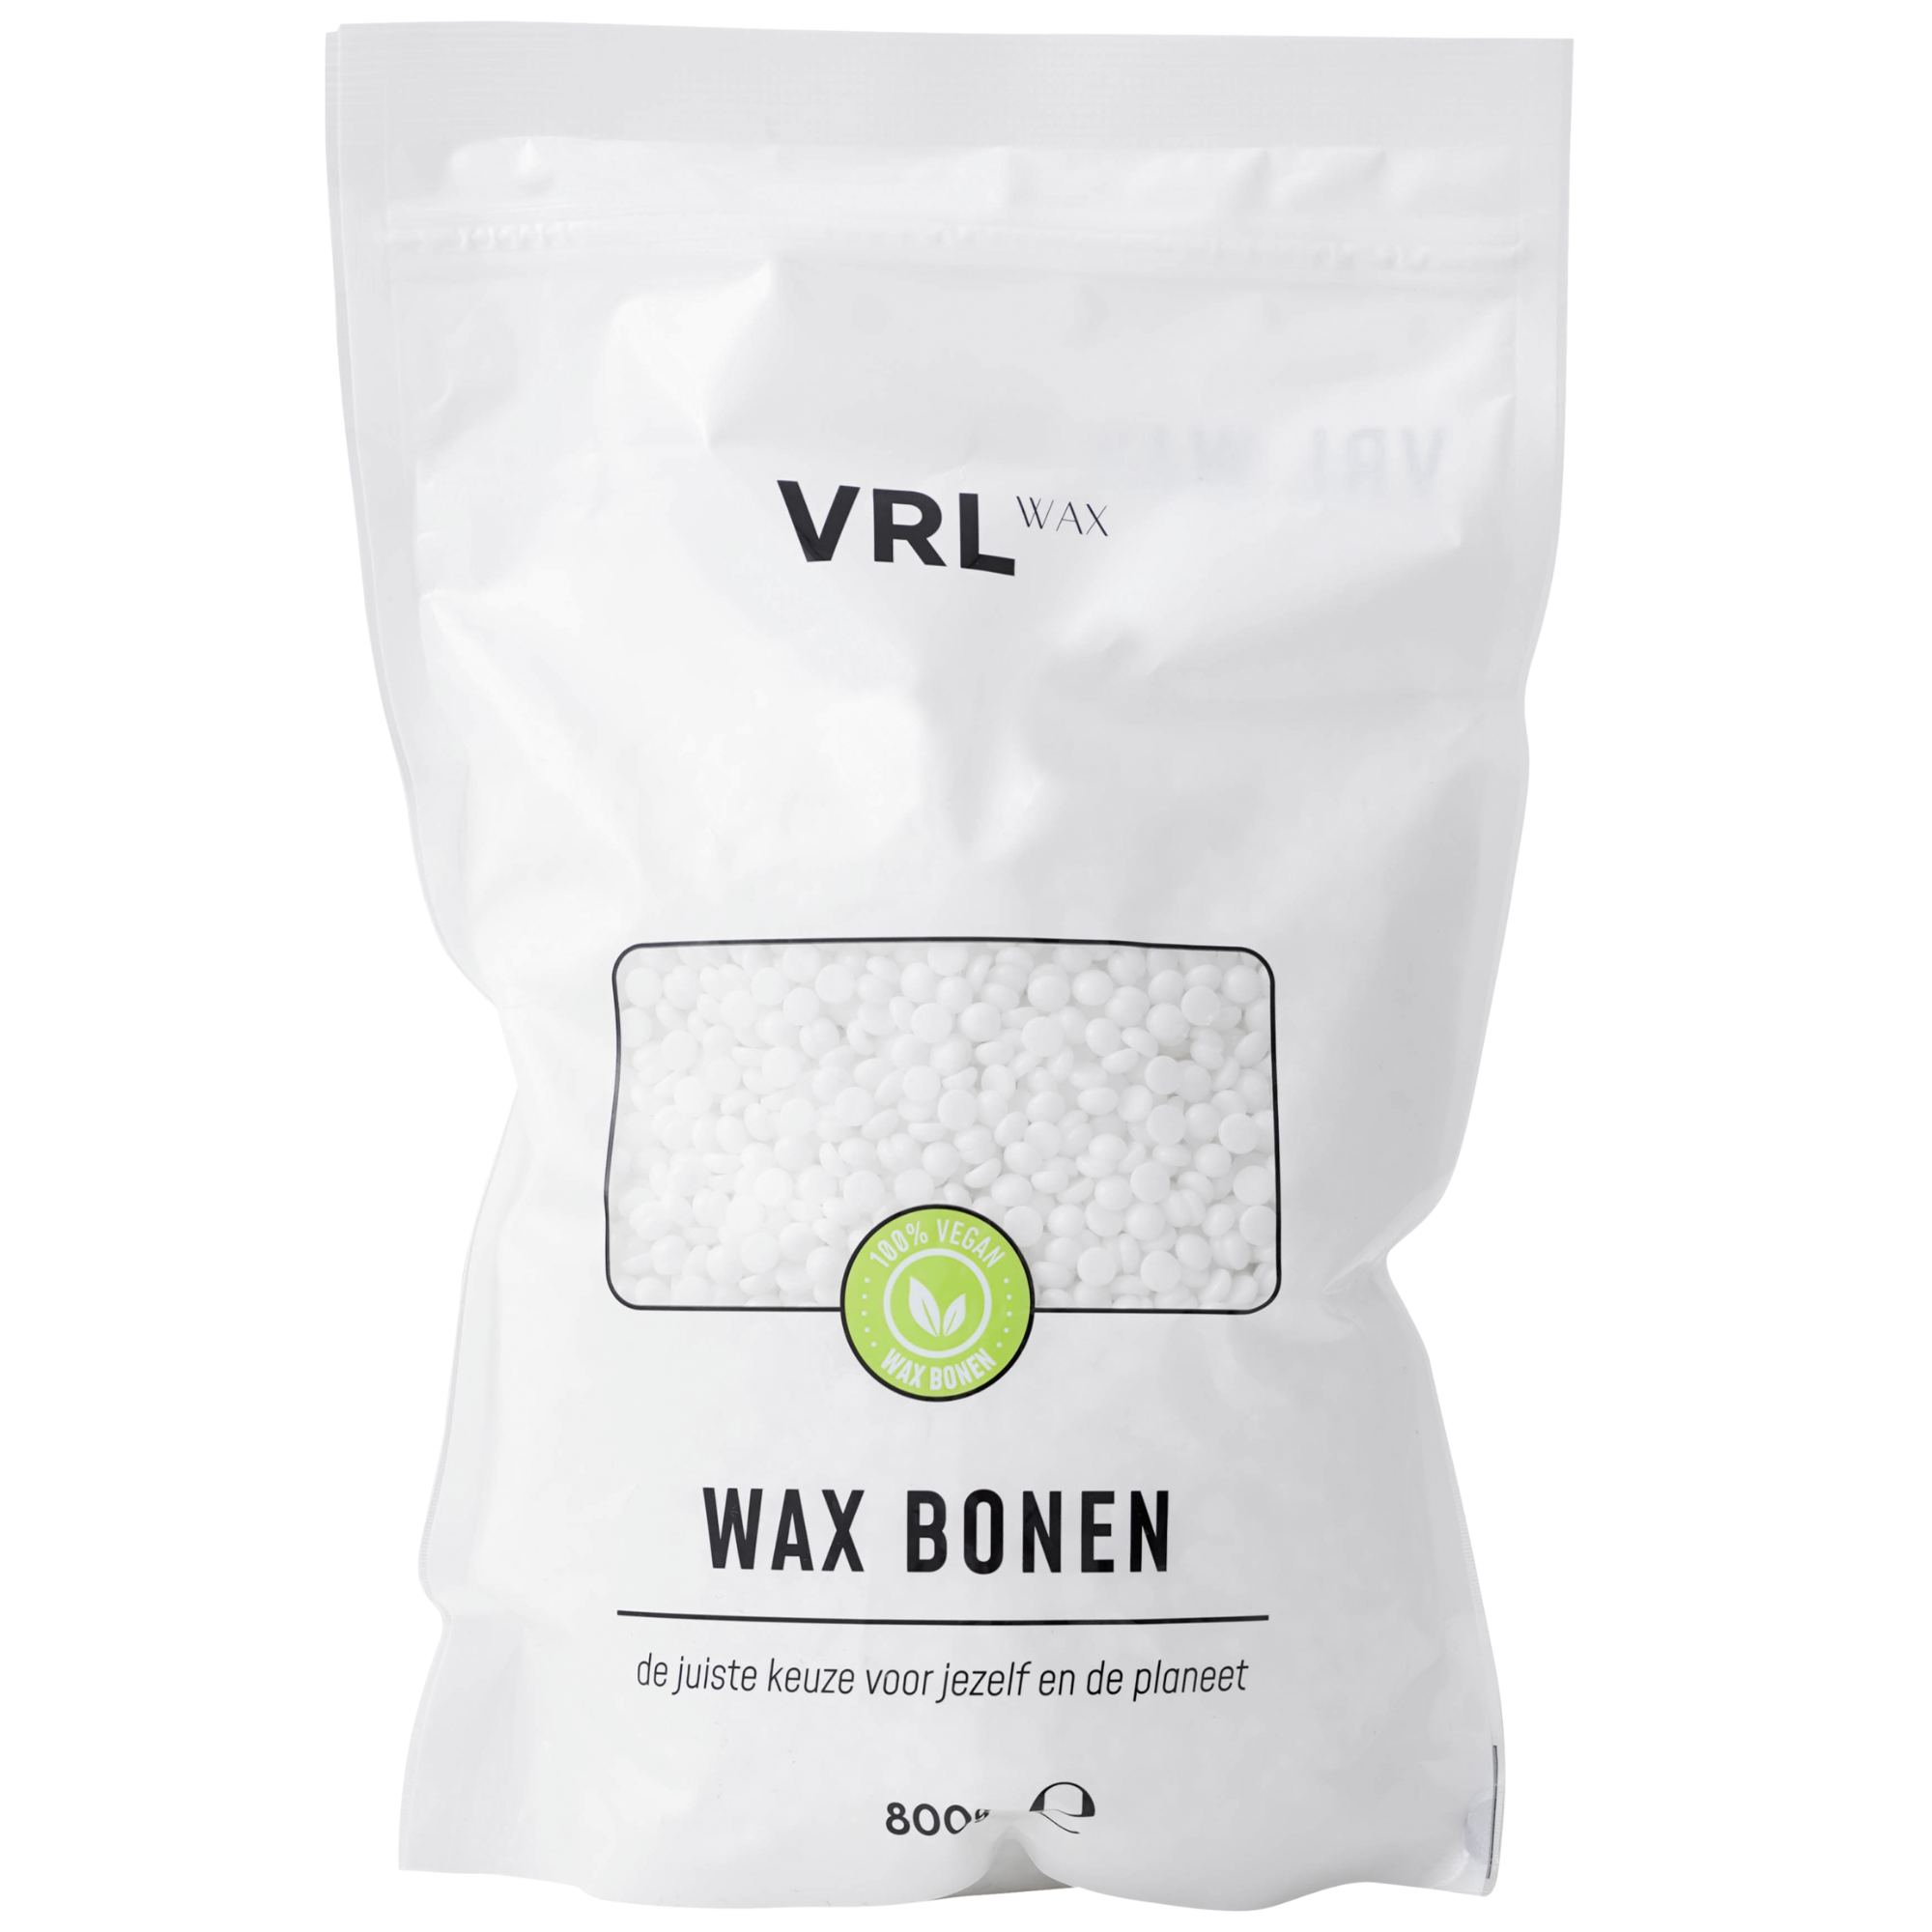 VRL wax bonen wit